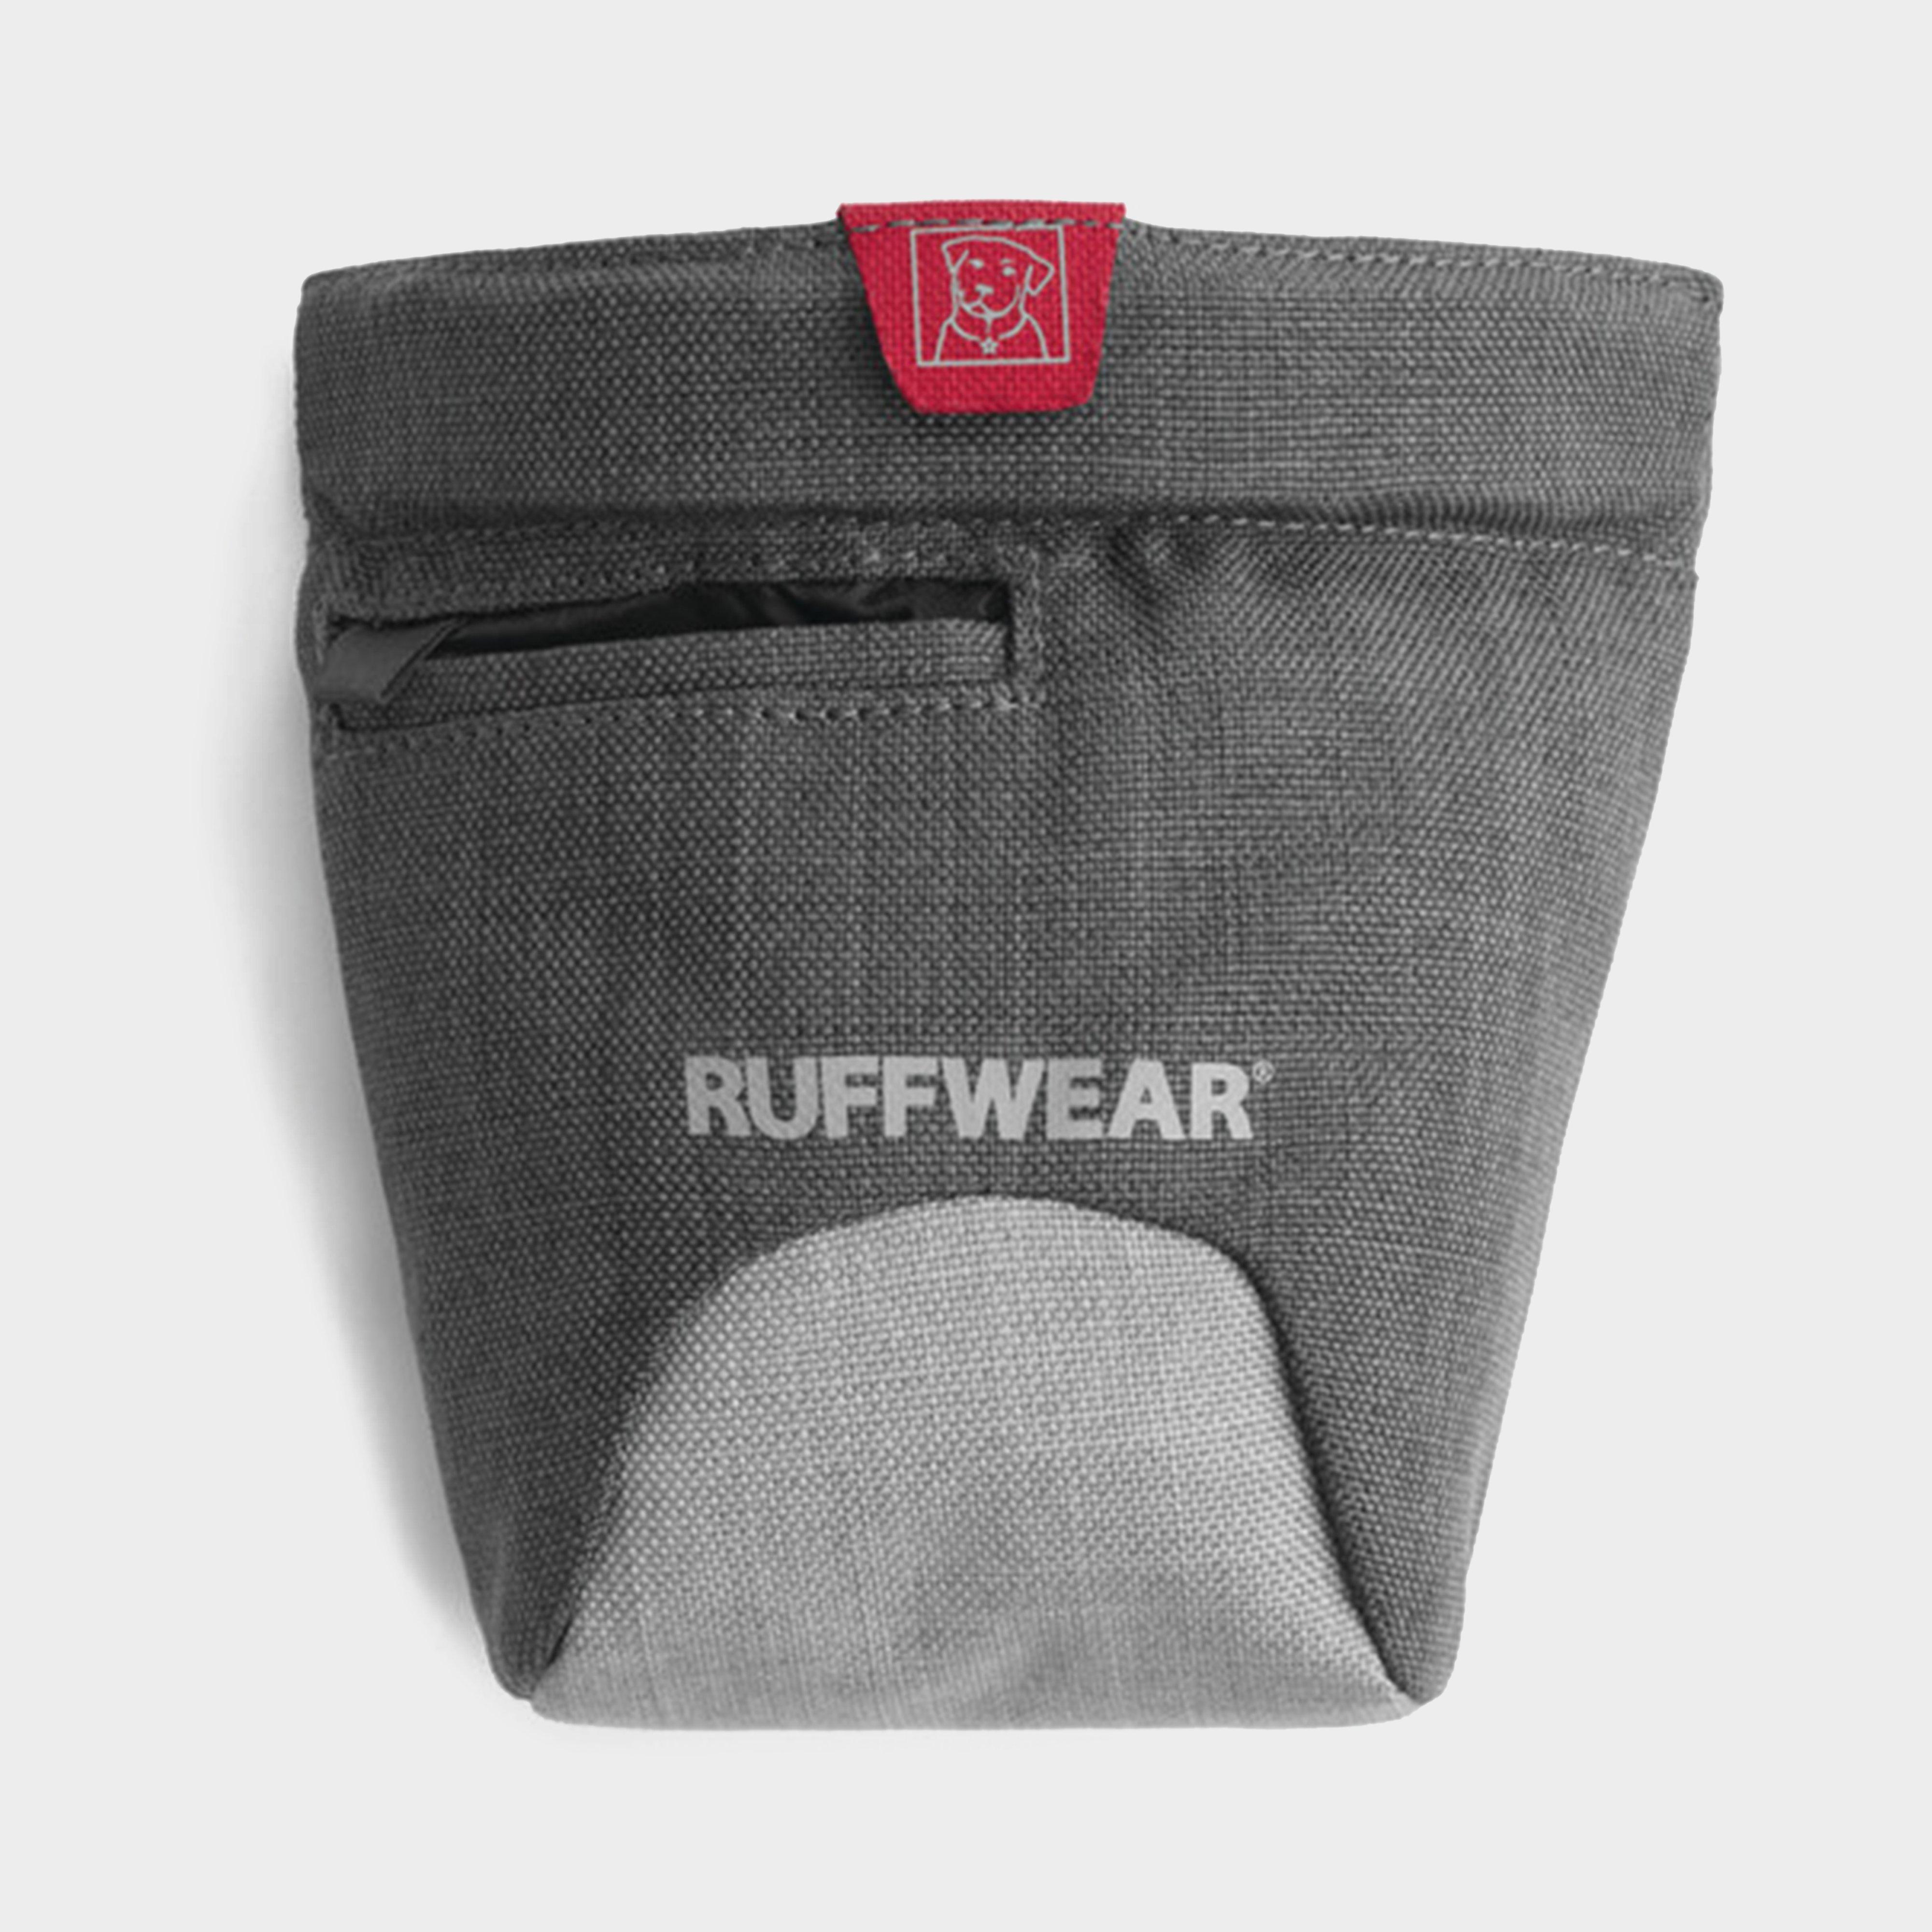 Ruffwear Treat Trader Bag - Grey/mgy  Grey/mgy